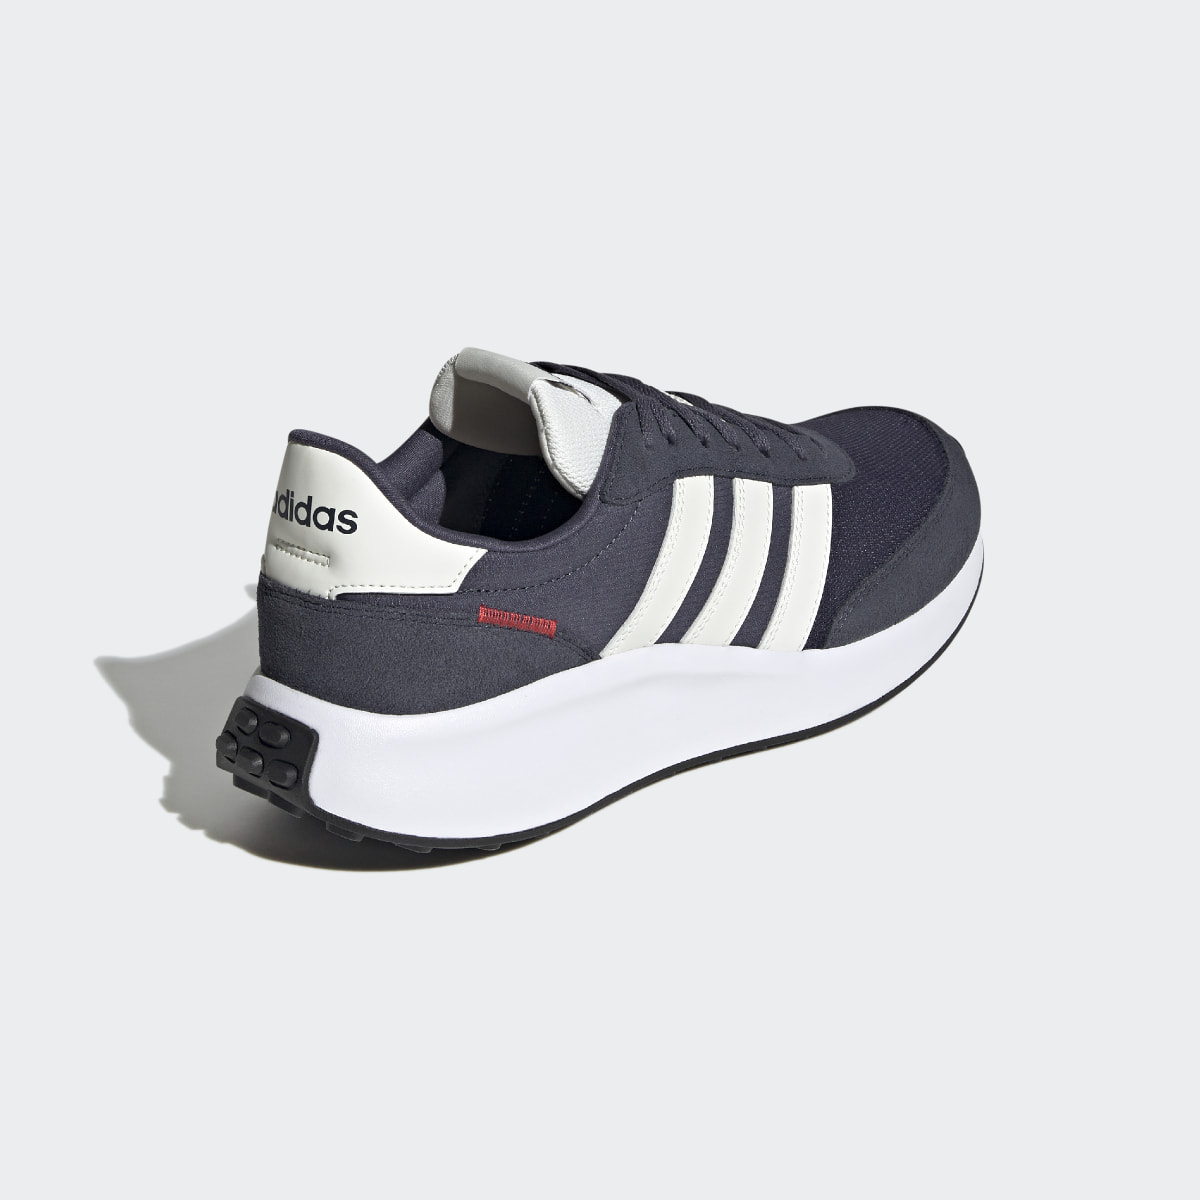 Adidas Run 70s Lifestyle Running Shoes. 6